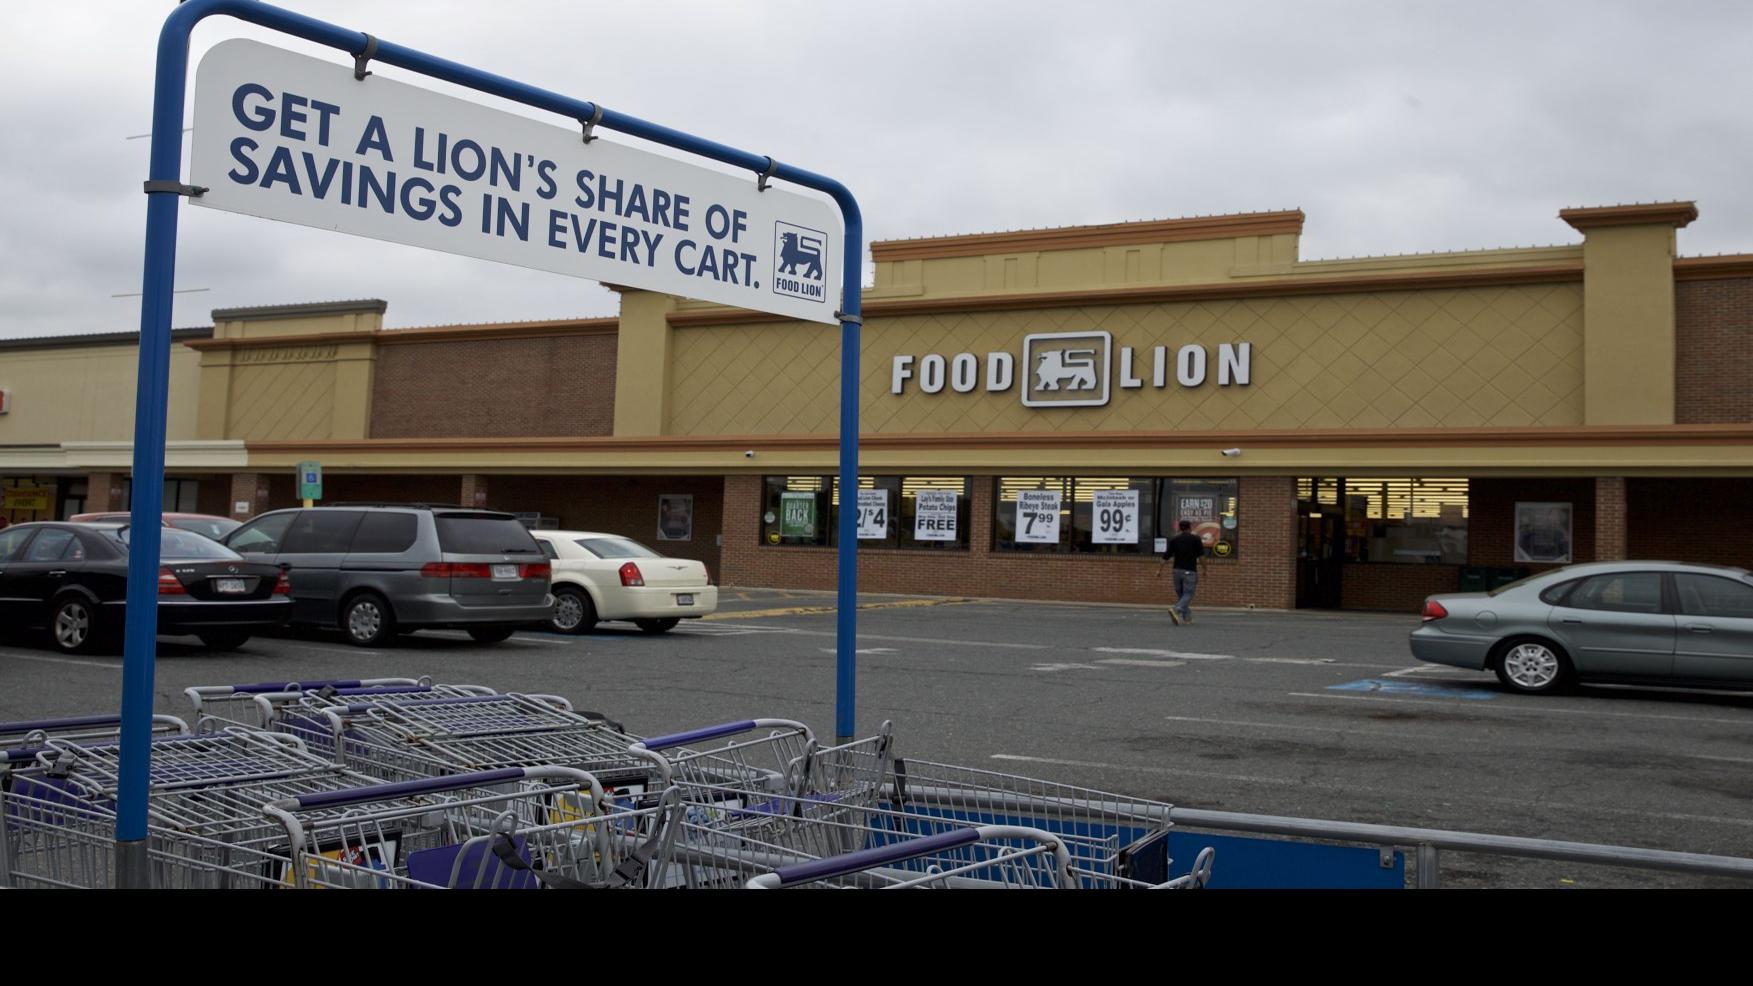 Area Food Lions To Close Beginning Oct 14 Will Convert To Weis Markets Stores Dailyprogress Com [ 986 x 1753 Pixel ]